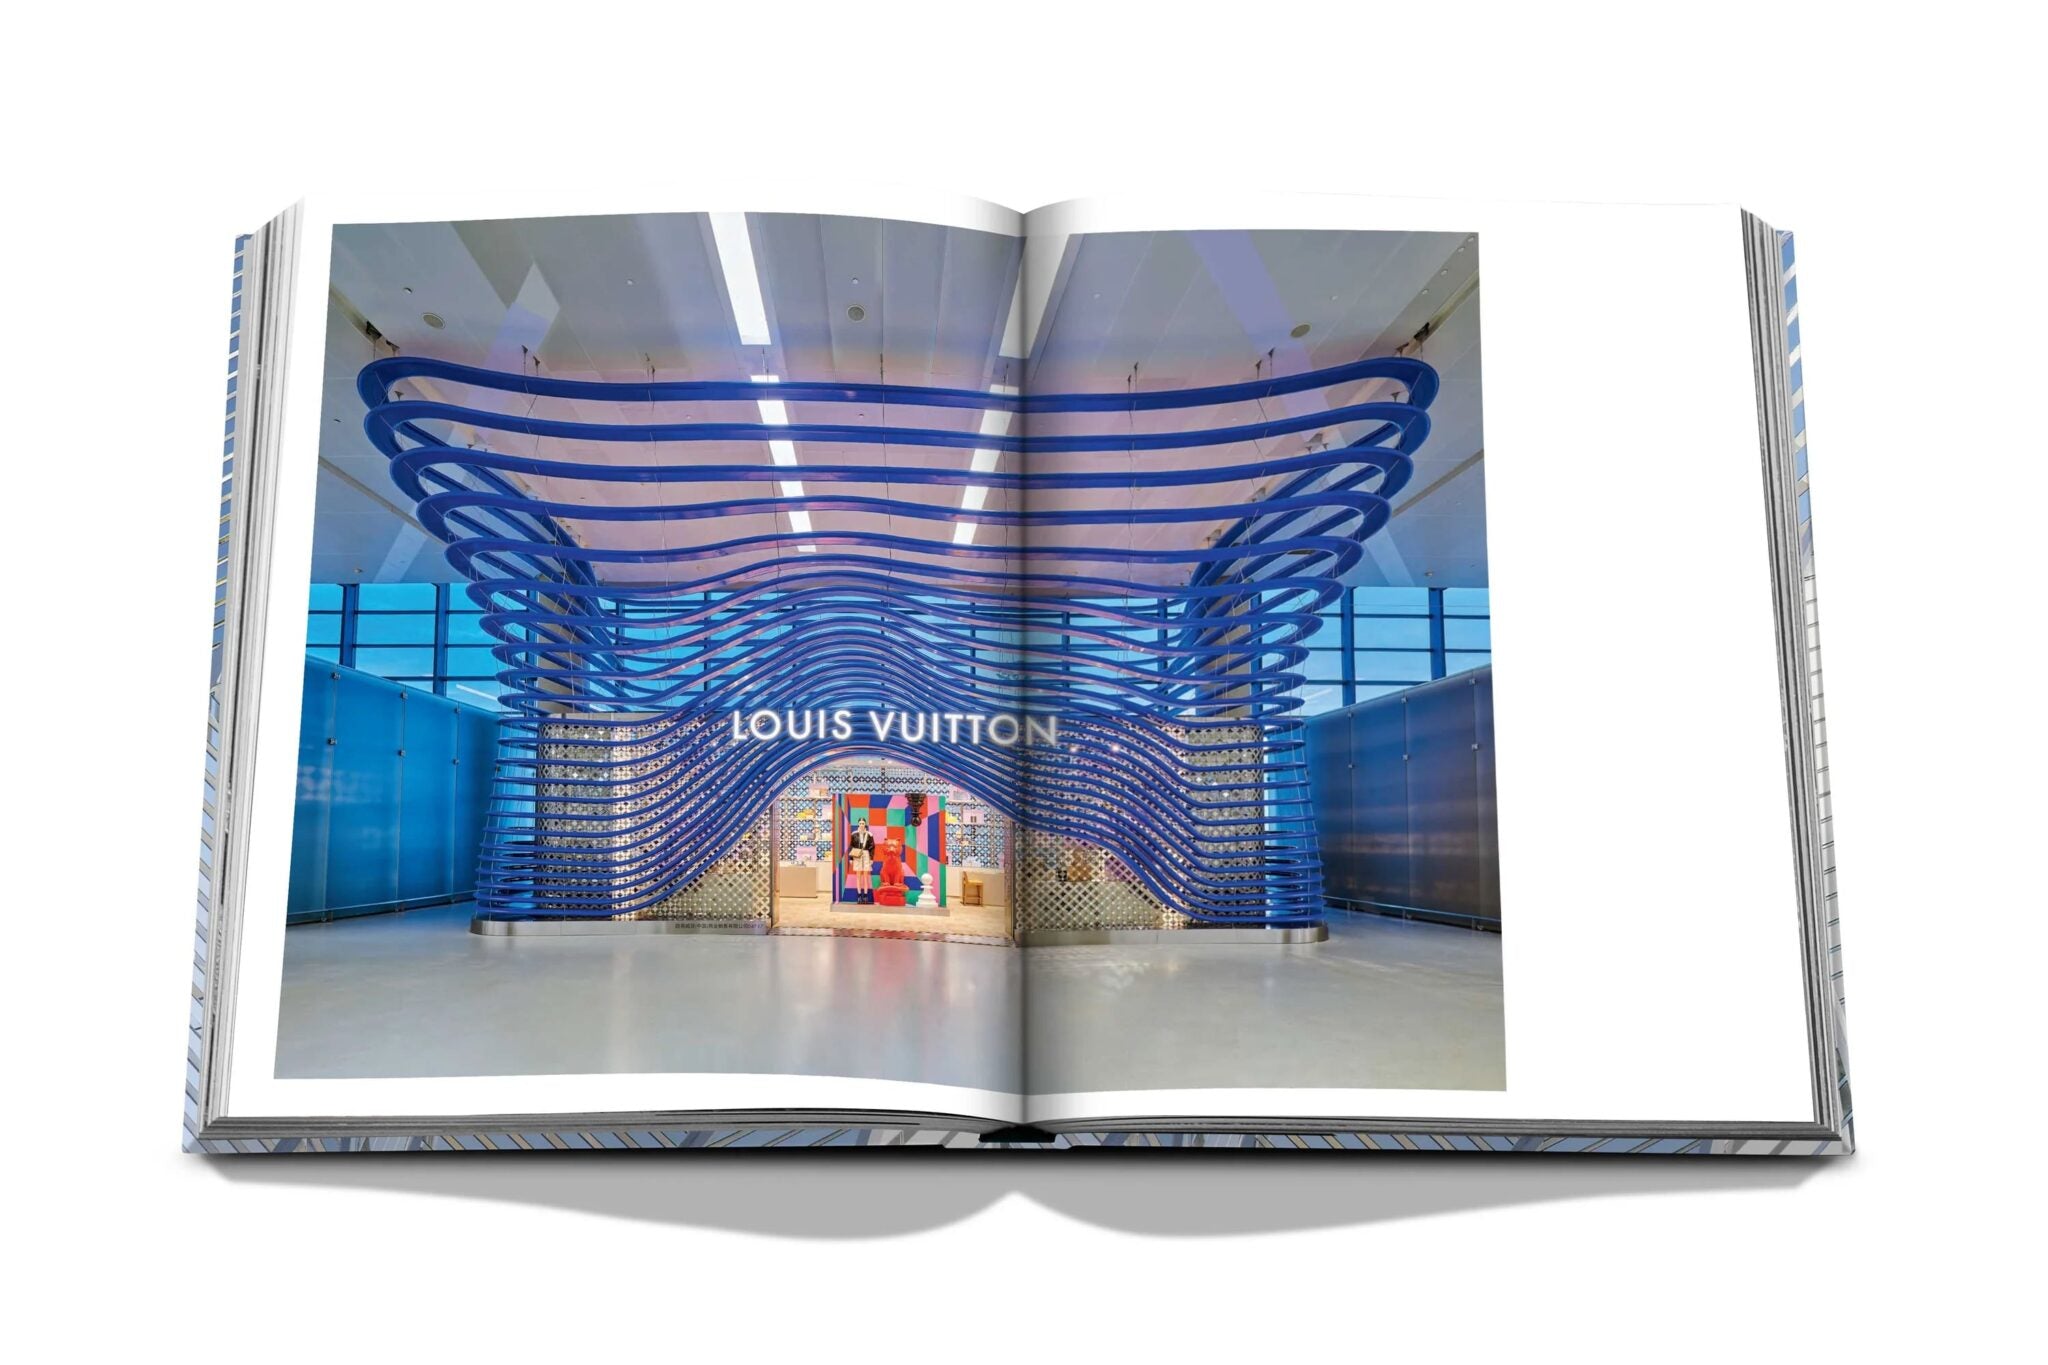 Asnouline Louis Vuitton Skin: Arquitectura del lujo (edición de Seúl)